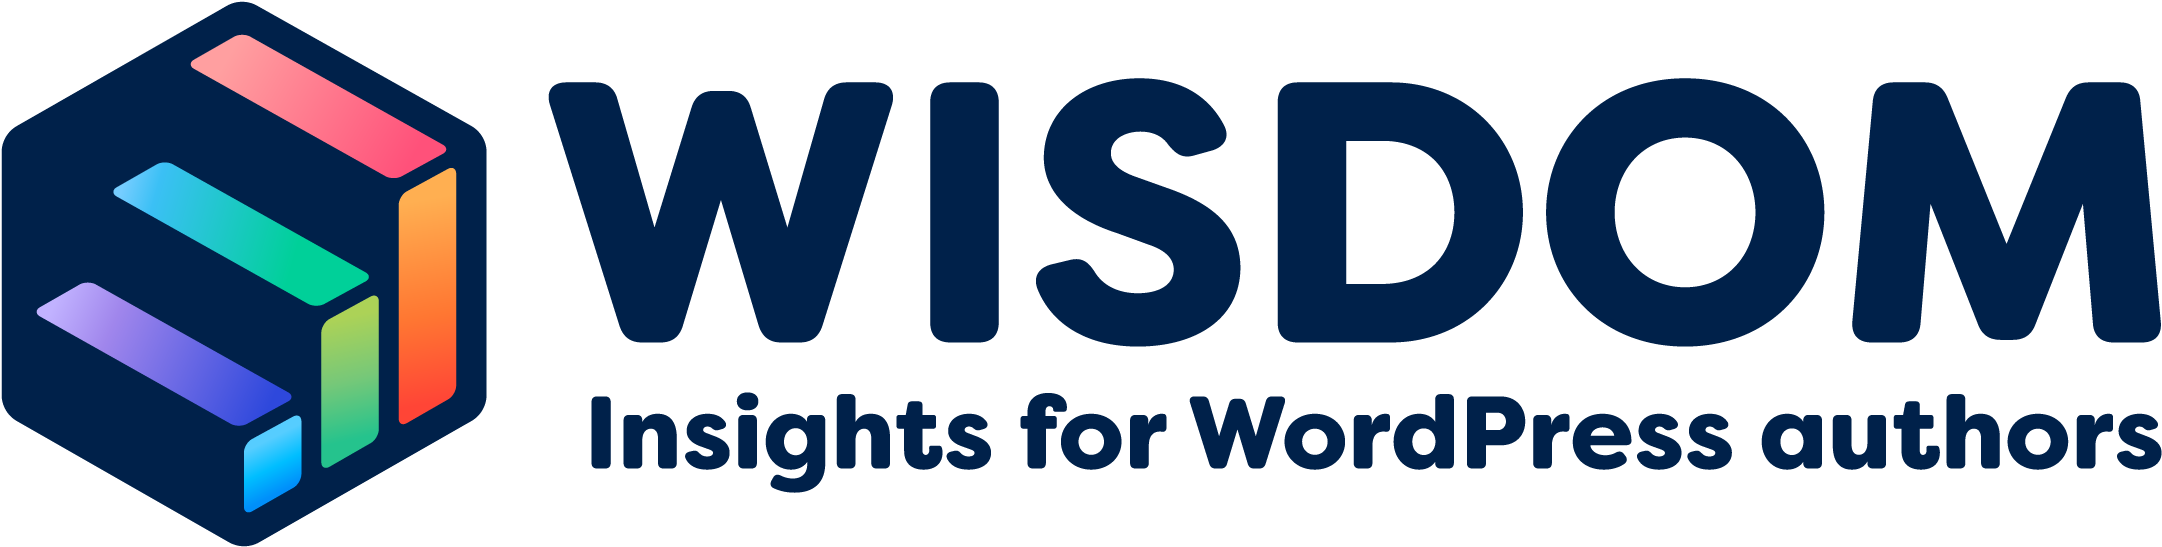 Wisdom Word Press Plugin Logo